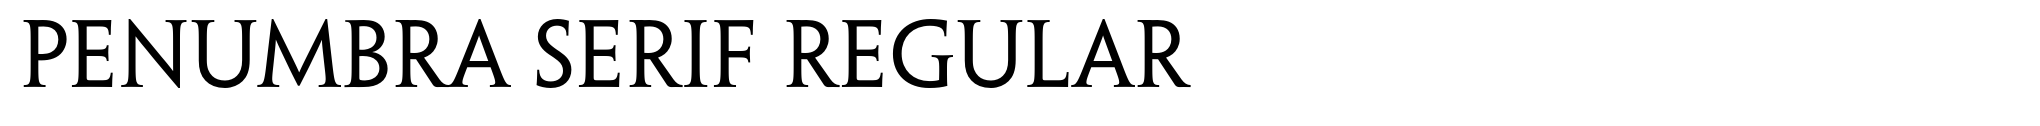 Penumbra Serif Regular image